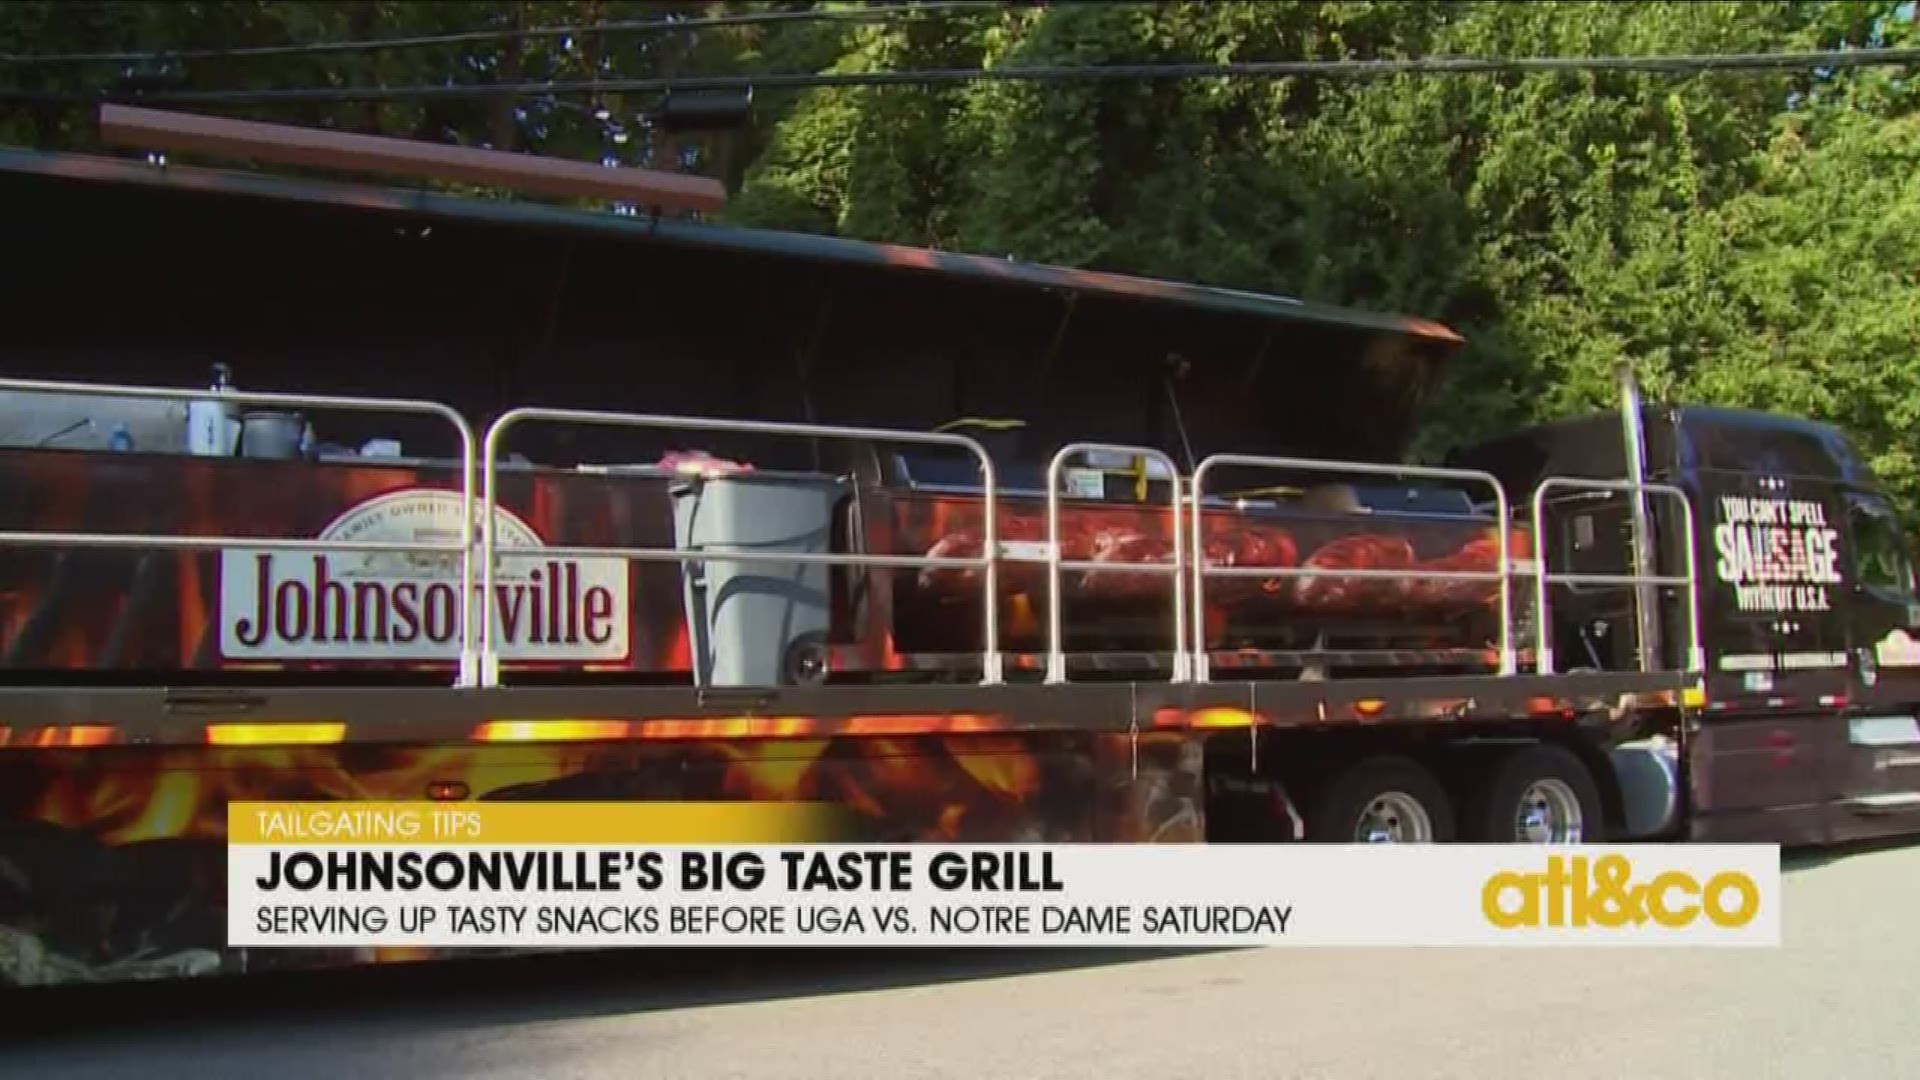 Christine Pullara takes us inside Johnsonville's Big Taste Grill and previews their tasty tailgate snacks!